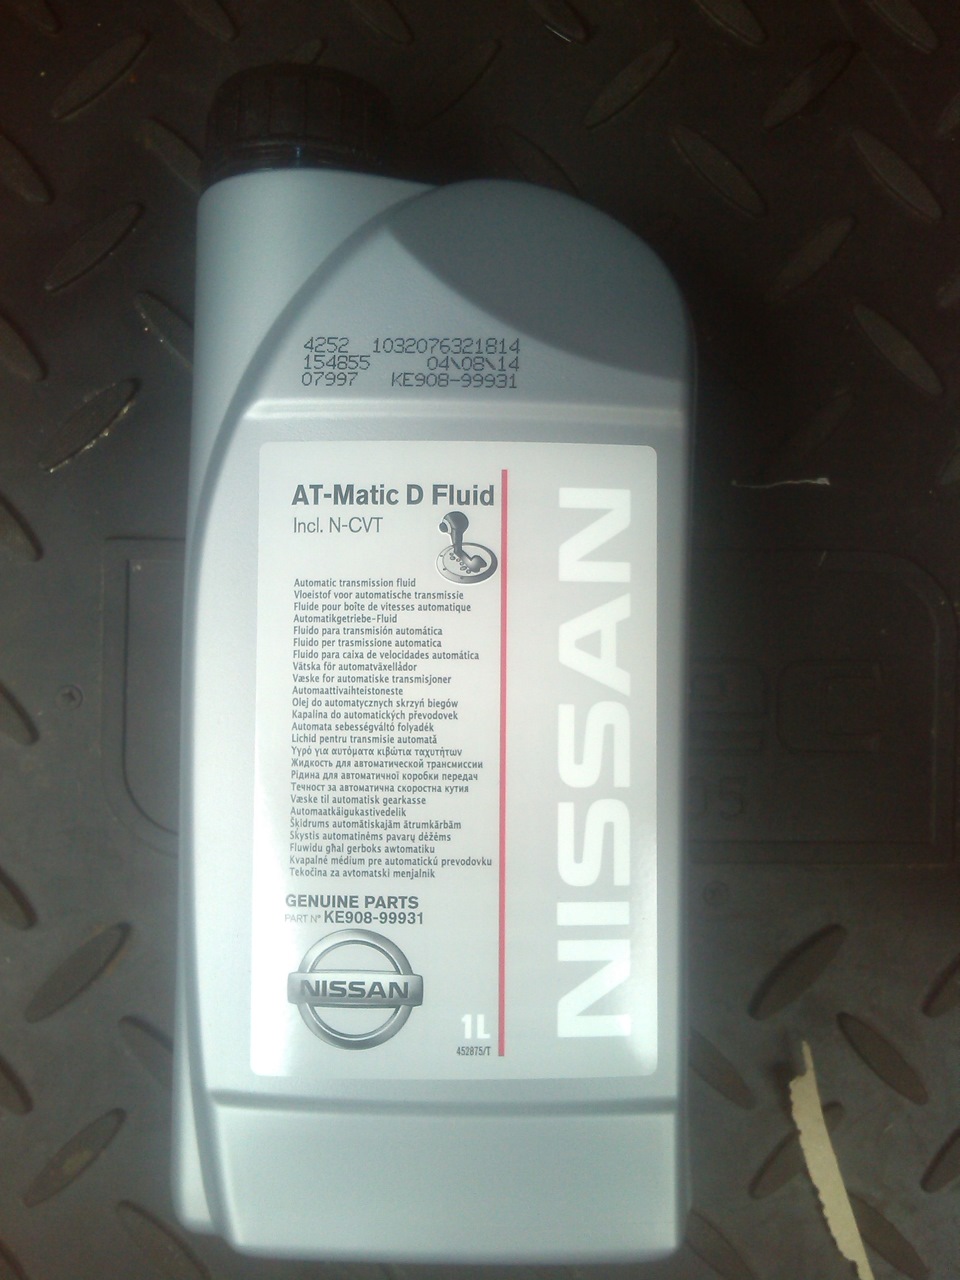 Альмера классик масло в акпп. Масло АКПП Nissan Almera Classic 2006 года. Ниссан Альмера Классик 2006 года масло в АКПП. Масло АКПП Ниссан Альмера 2010. Масло в АКПП нисанальмераклассикb10.